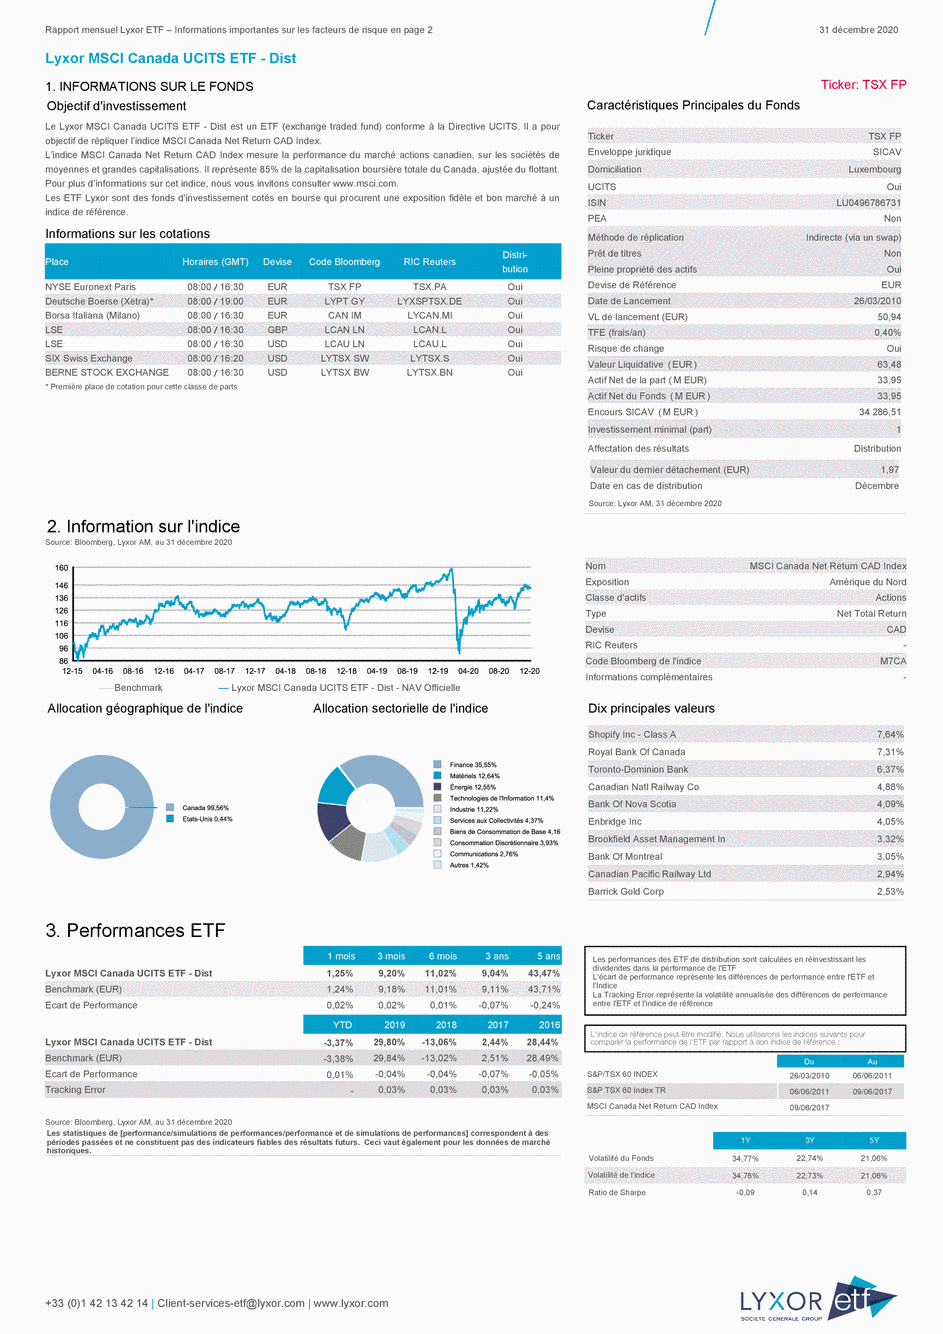 Reporting Lyxor MSCI Canada UCITS ETF - Dist - 31/12/2020 - Français